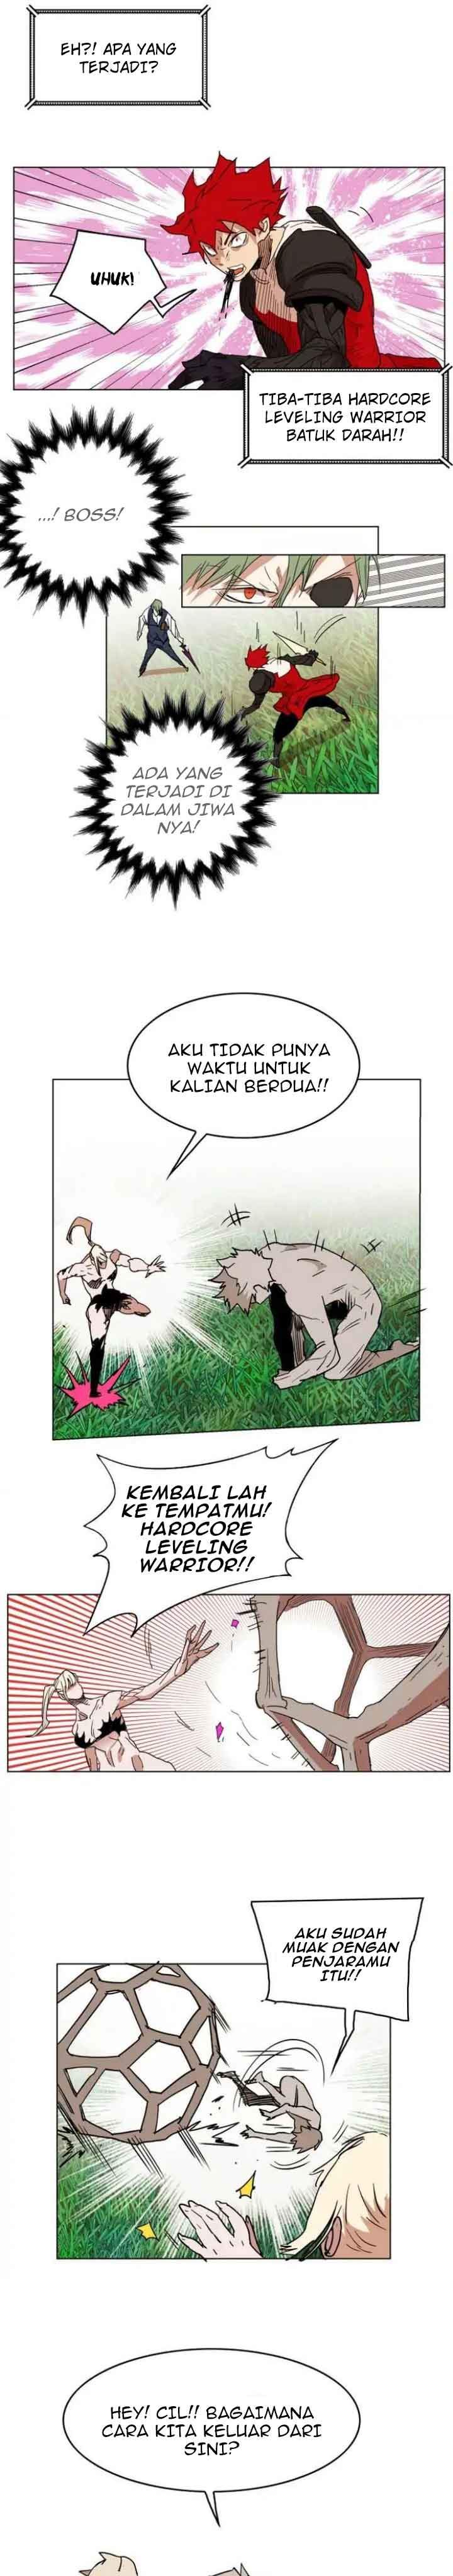 Baca manga Hardcore Leveling Warrior Chapter 131 bahasa Indonesia terbaru d...